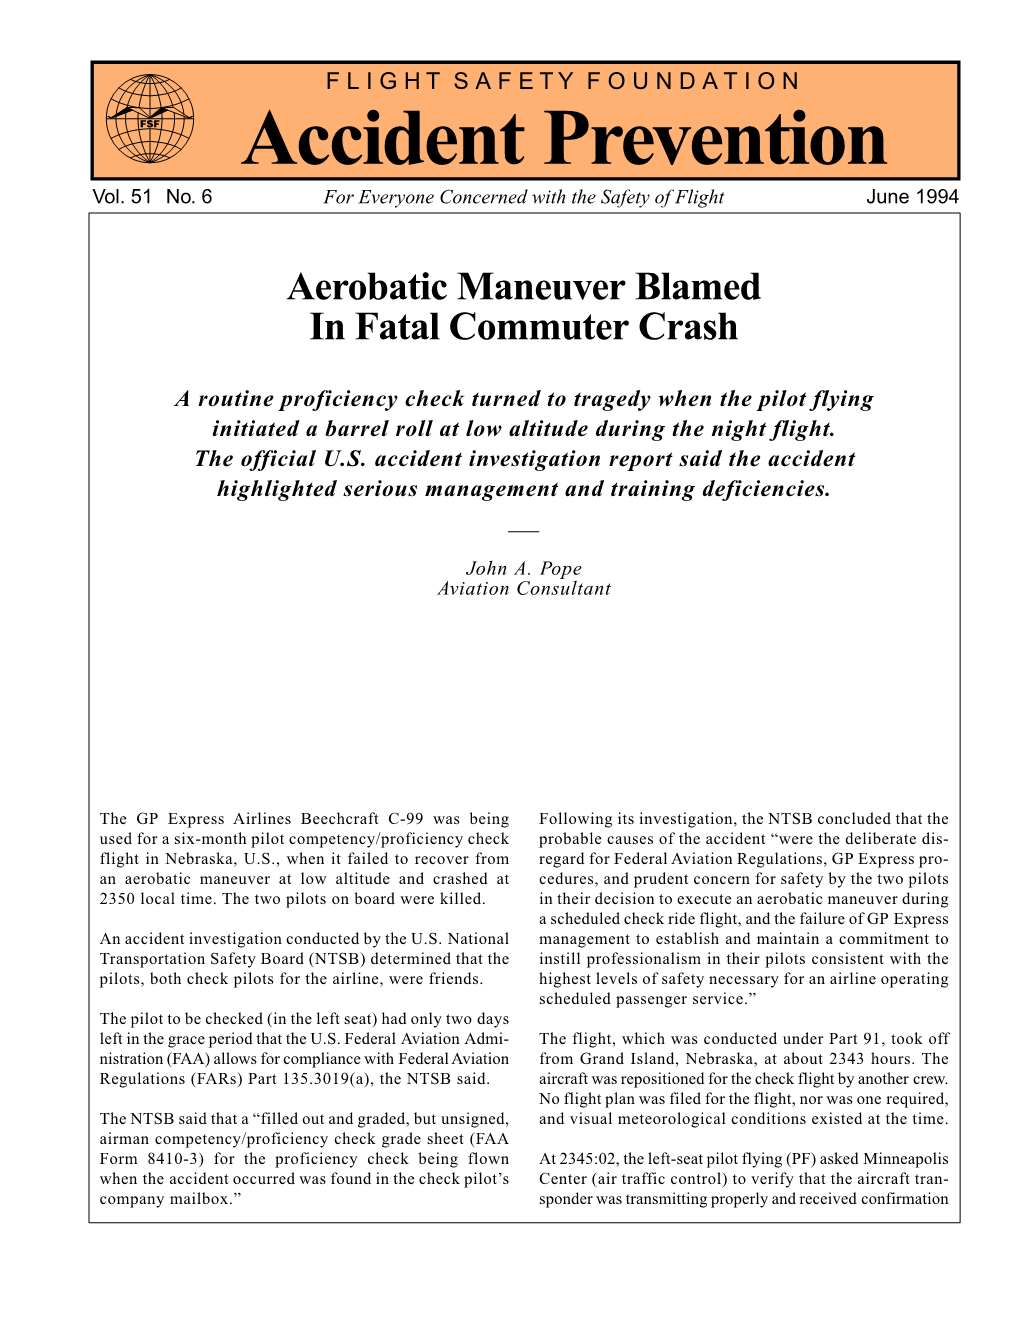 Accident Prevention June 1994